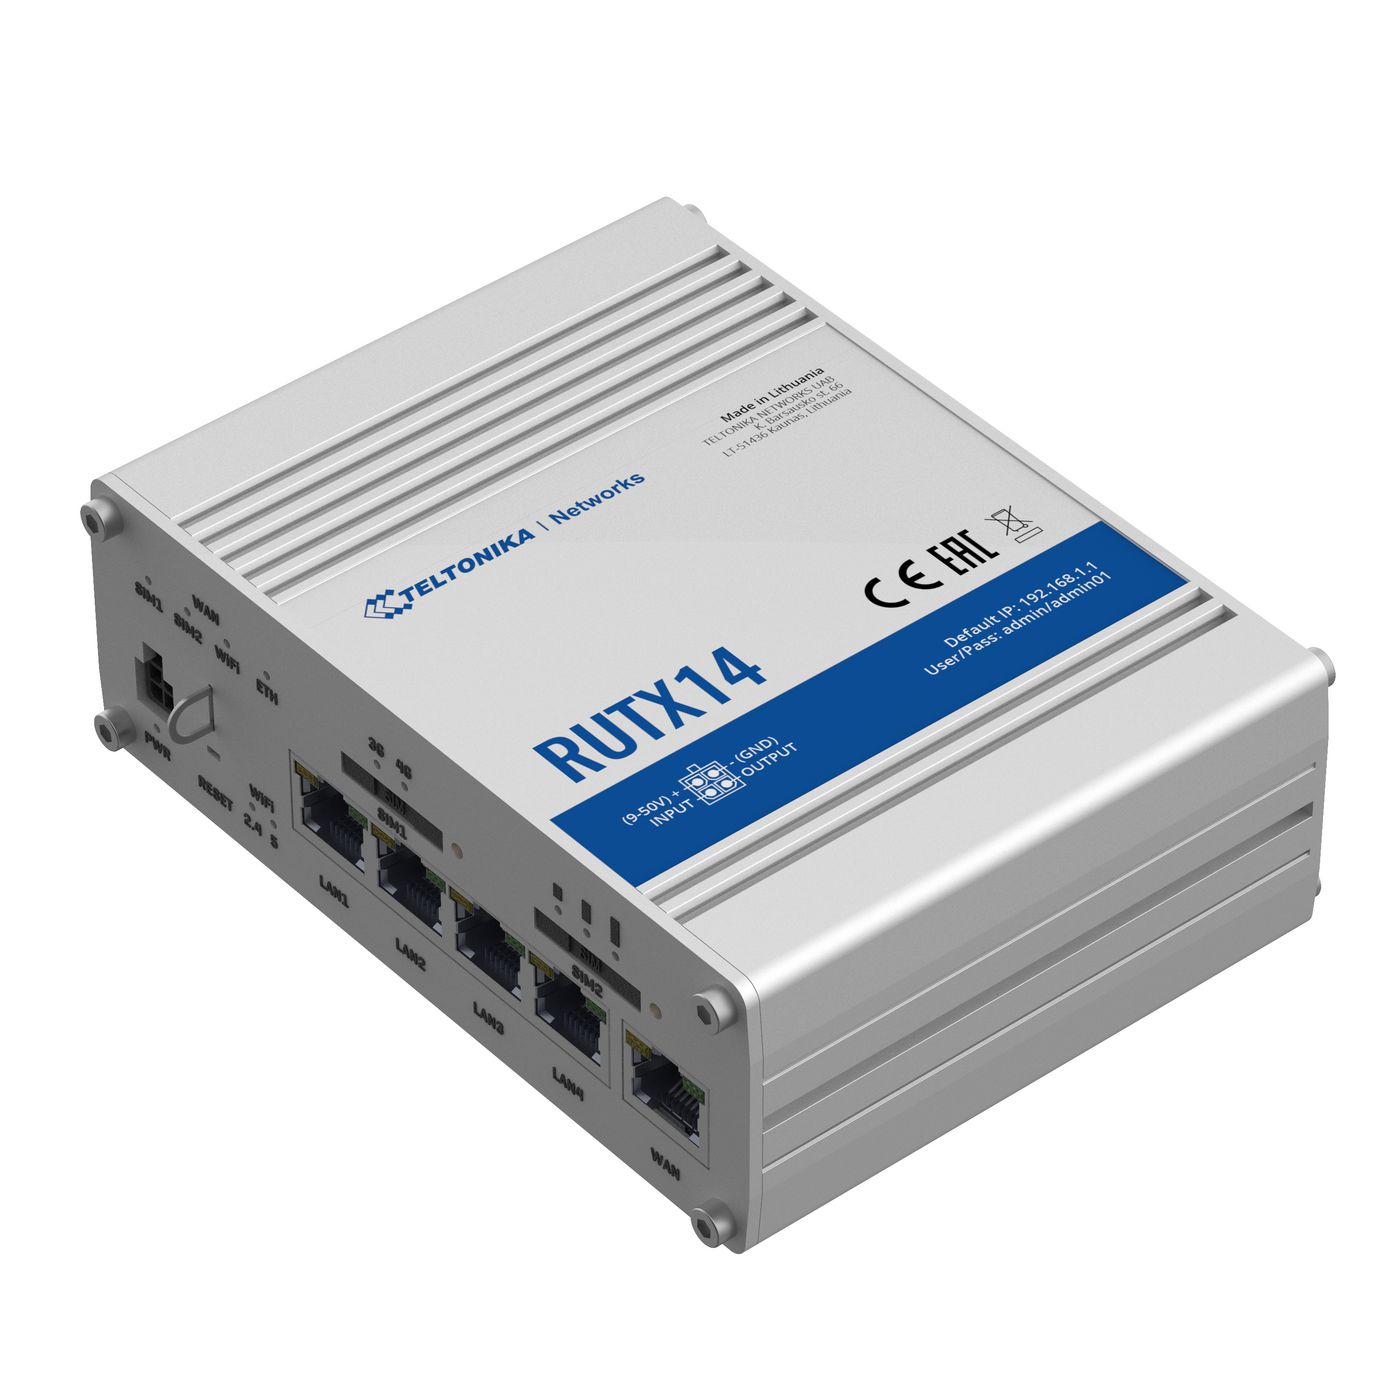 Teltonika RUTX14 Rugged Ethernet Router